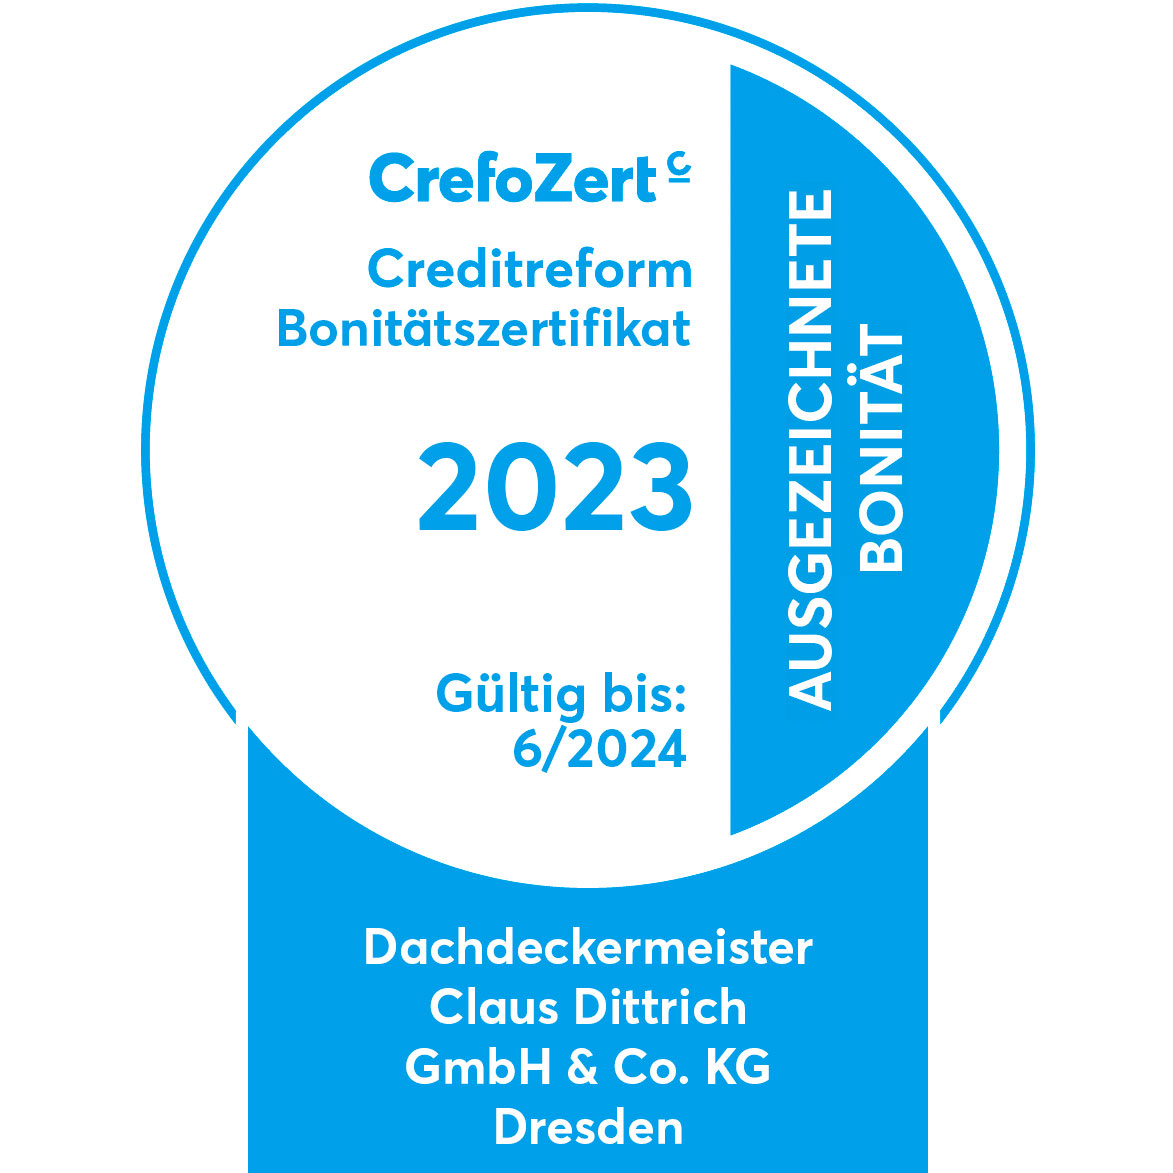 CrefoZert. Creditreform Bonitätszertifikat 2023. Ausgezeichnete Bonität. Creditreform zertifiziertes Unternehmen: Dachdeckermeister Claus Dittrich GmbH & Co. KG